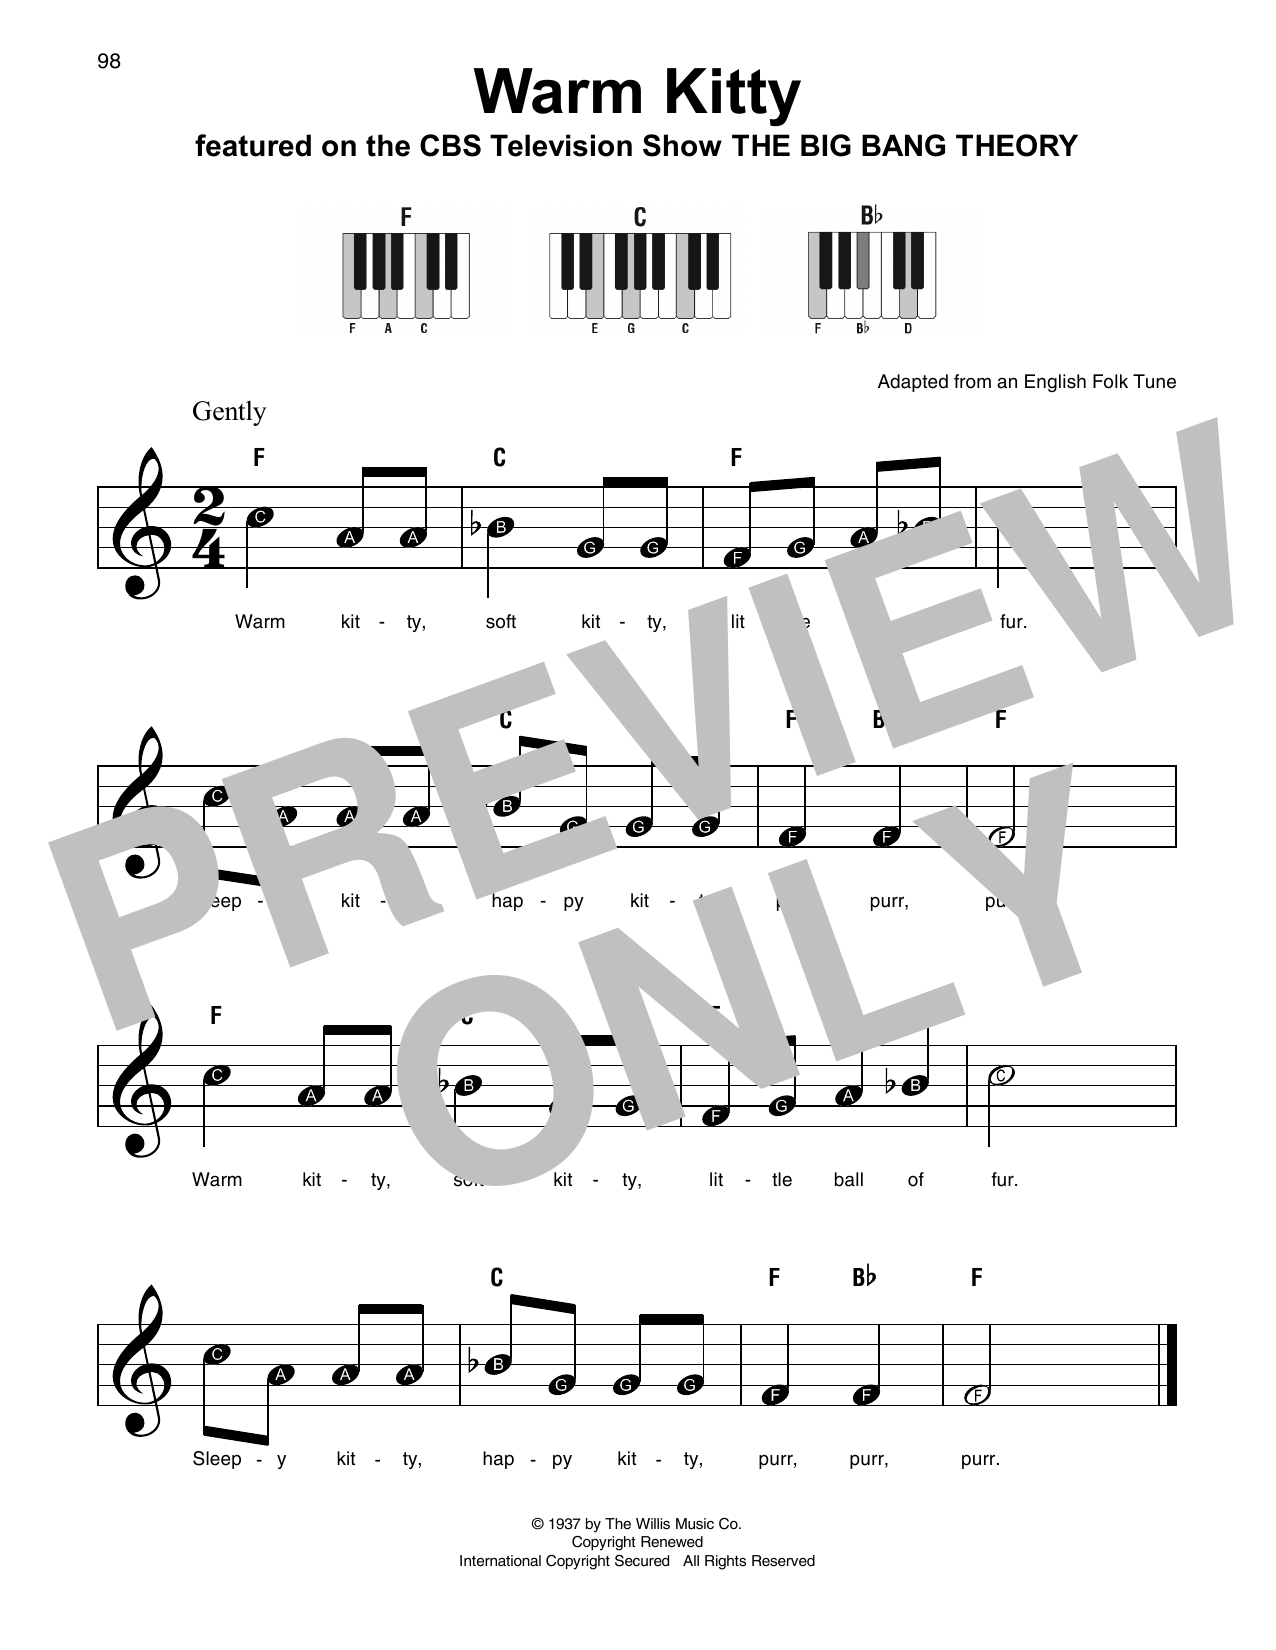 Download English Folk Tune (adapted) Warm Kitty Sheet Music